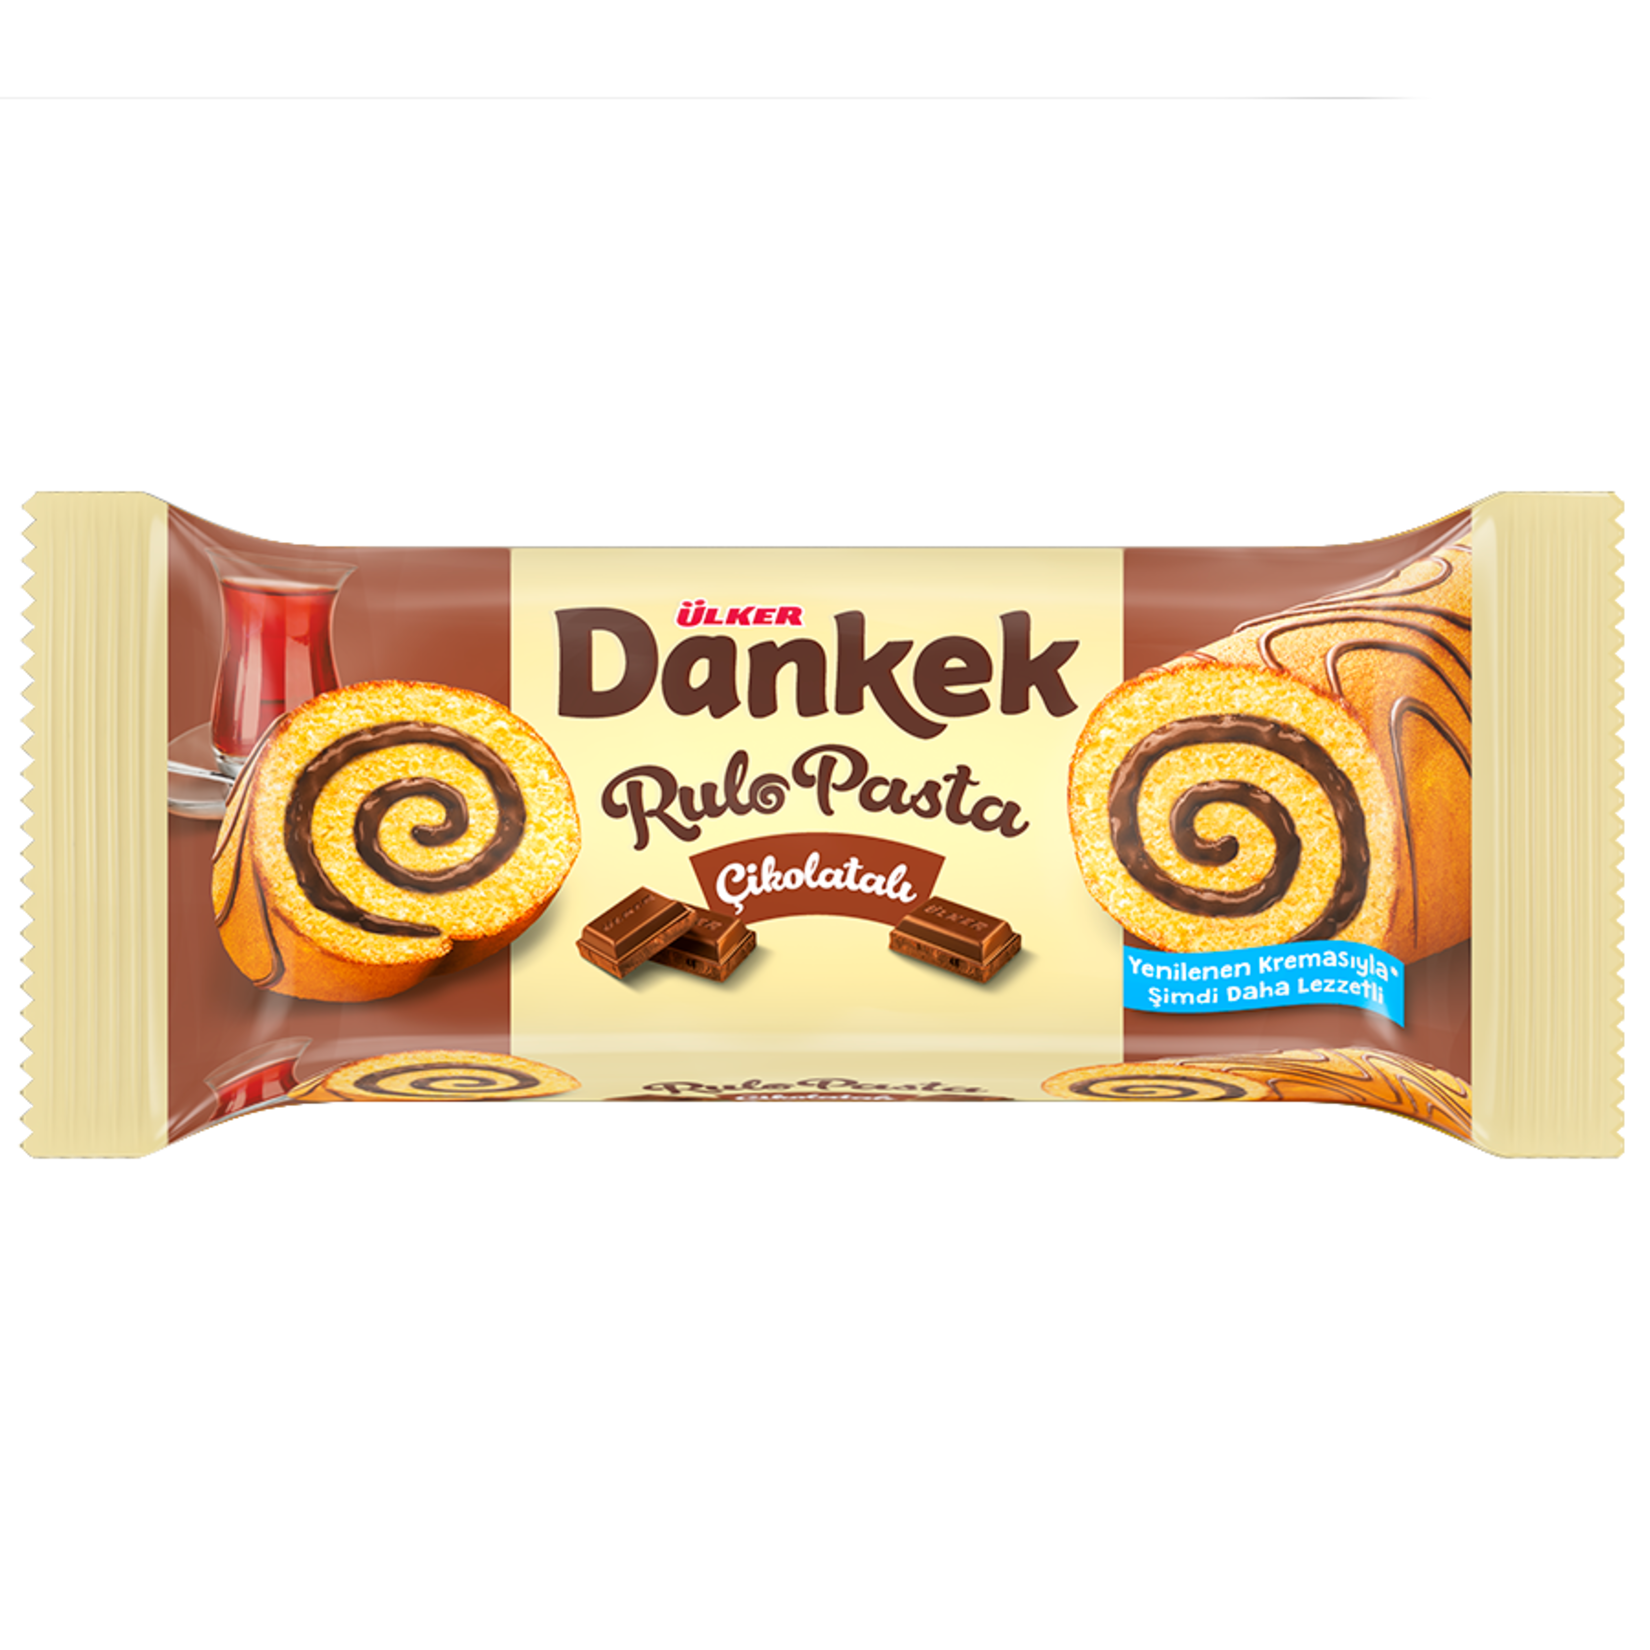 Ülker Dankek Rulo Pasta Cikolatali - Biskuitrolle mit Schokoladenfüllung 235g